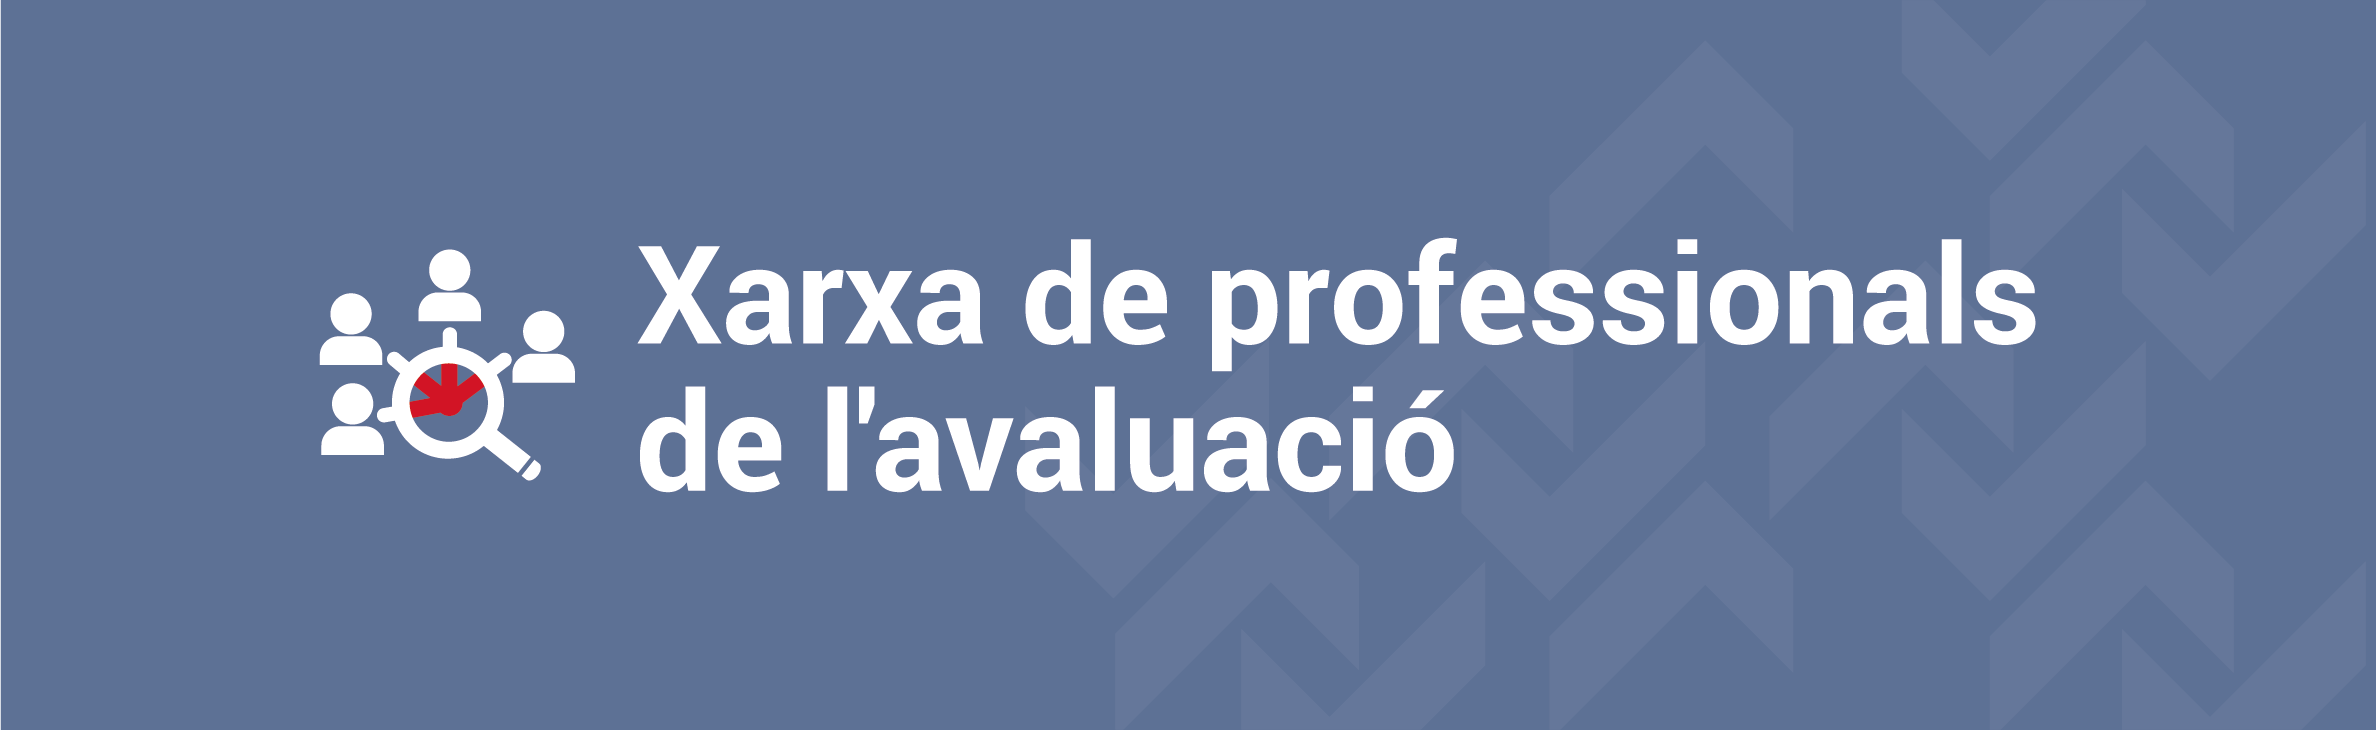 Banner Xarxa Professionals